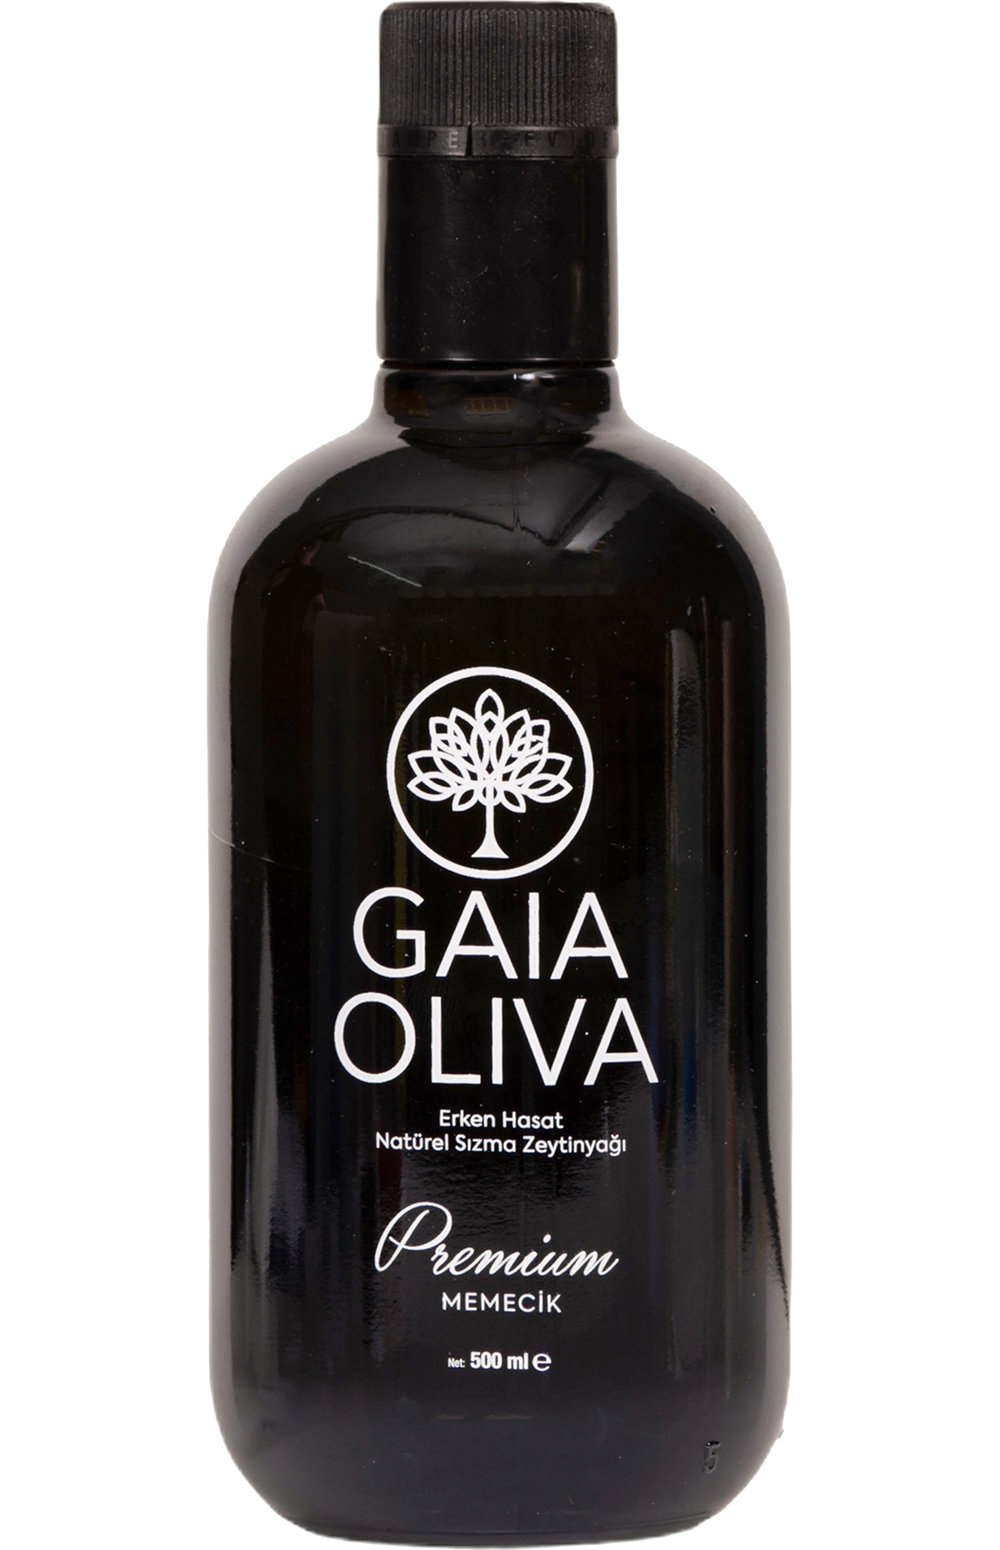 Gaia Oliva- Memecik